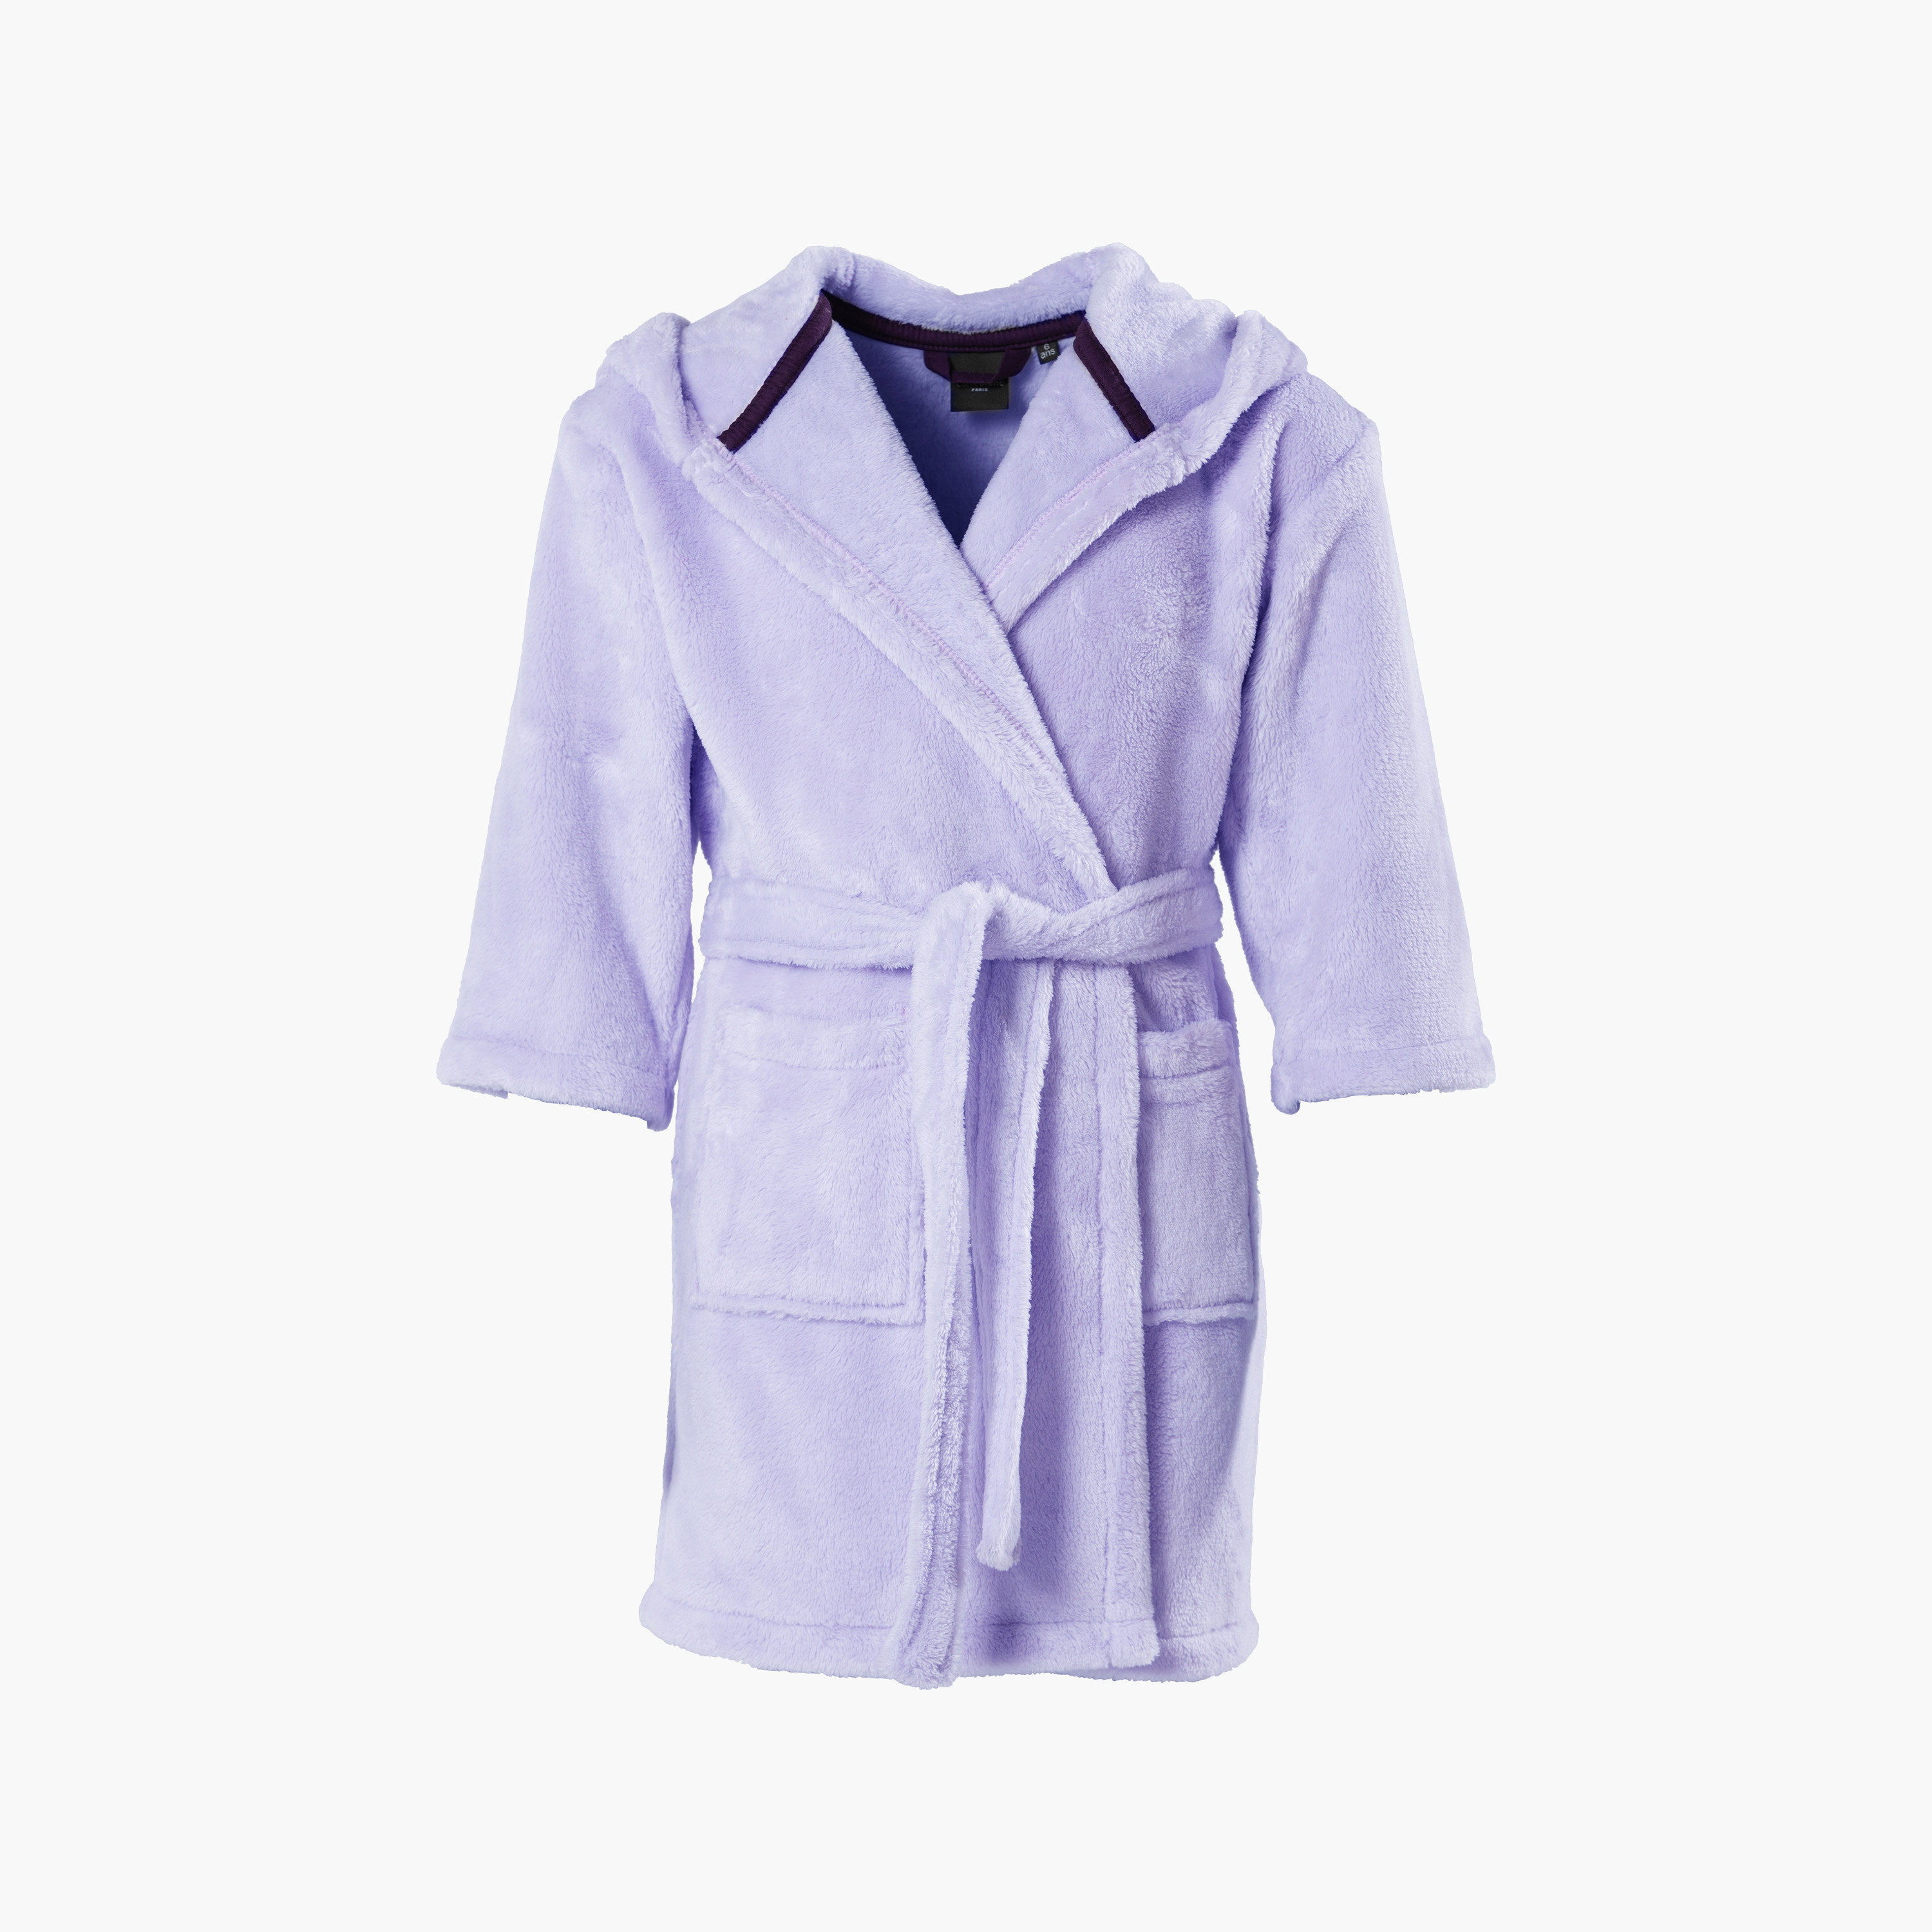 Anouchka parma fleece hooded children's dressing gown